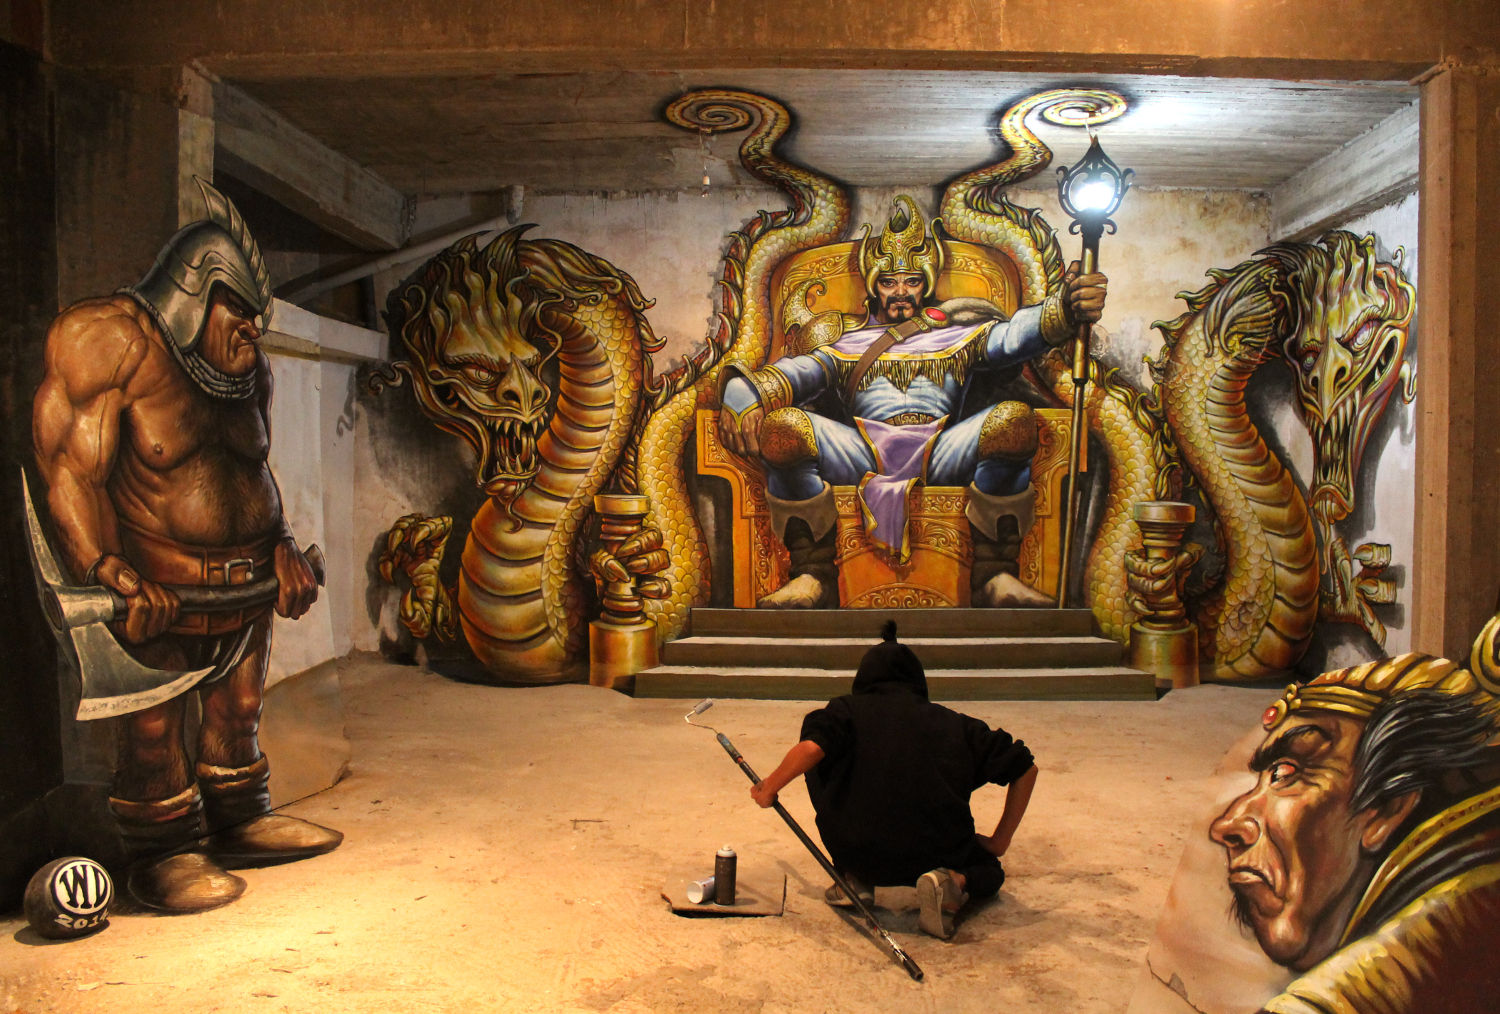 Hall of Fate, 2014 (Афины, Греция). Искусство Афин. Wild Drawing (WD) - современный художник. Граффити. Современное искусство Греции